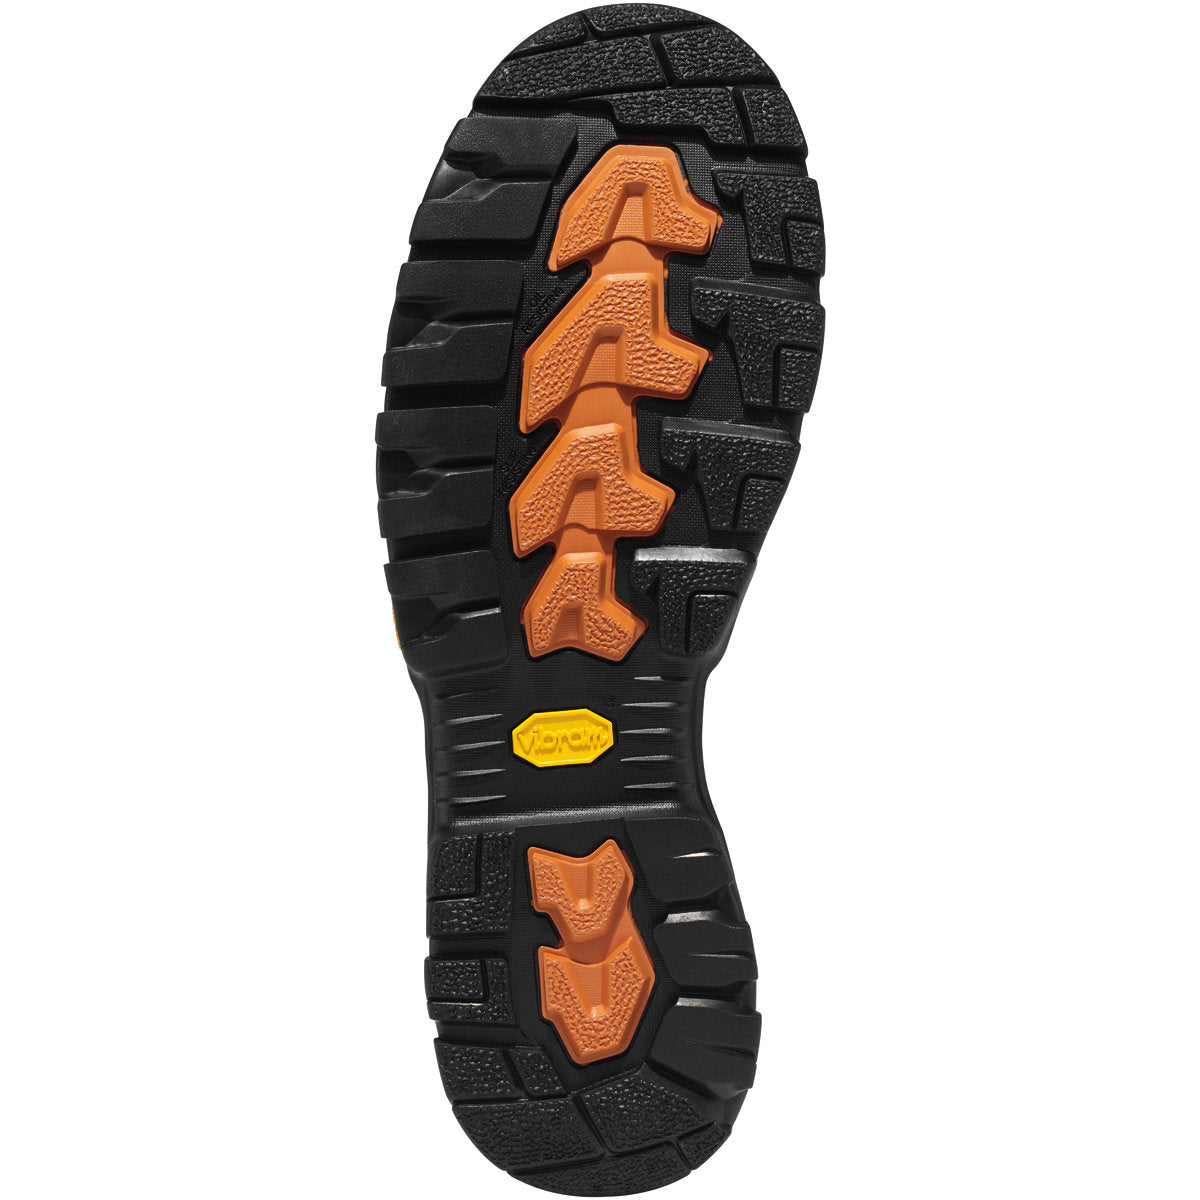 Danner Men's Vicious 8 Inch Composite Toe Work Boot